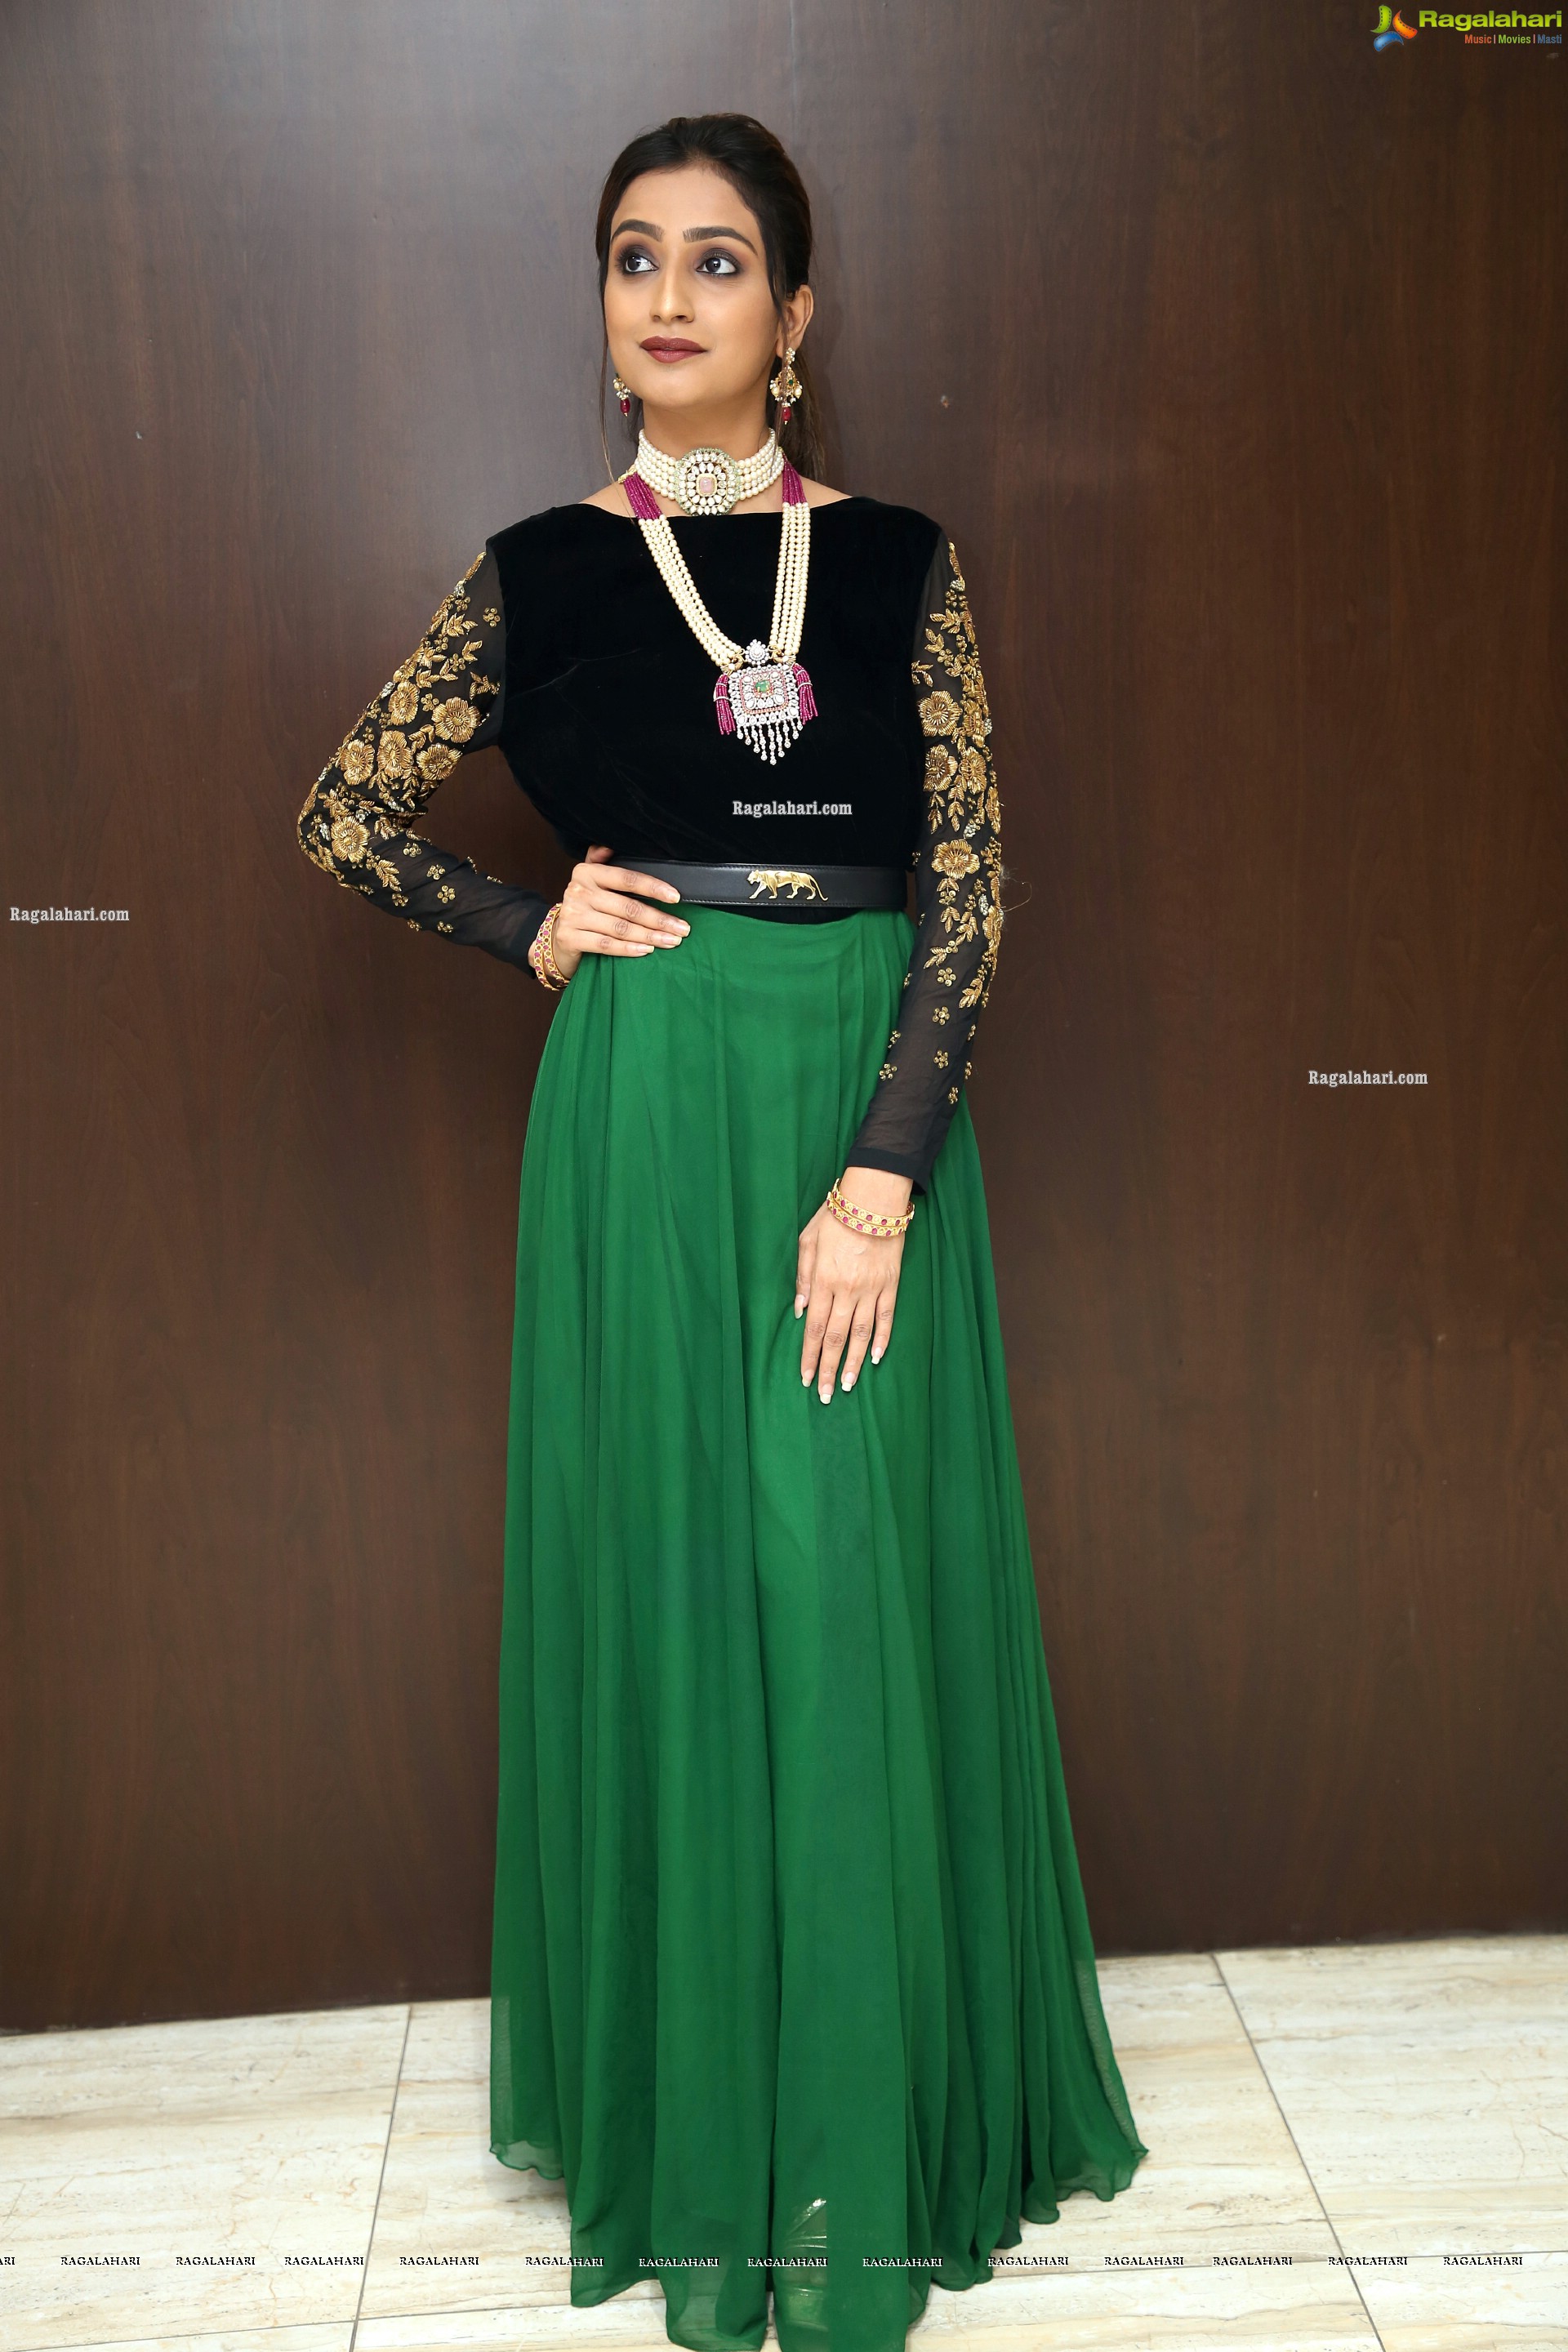 Model Fasiha Waseem in Traditional Jewellery, HD Photo Gallery